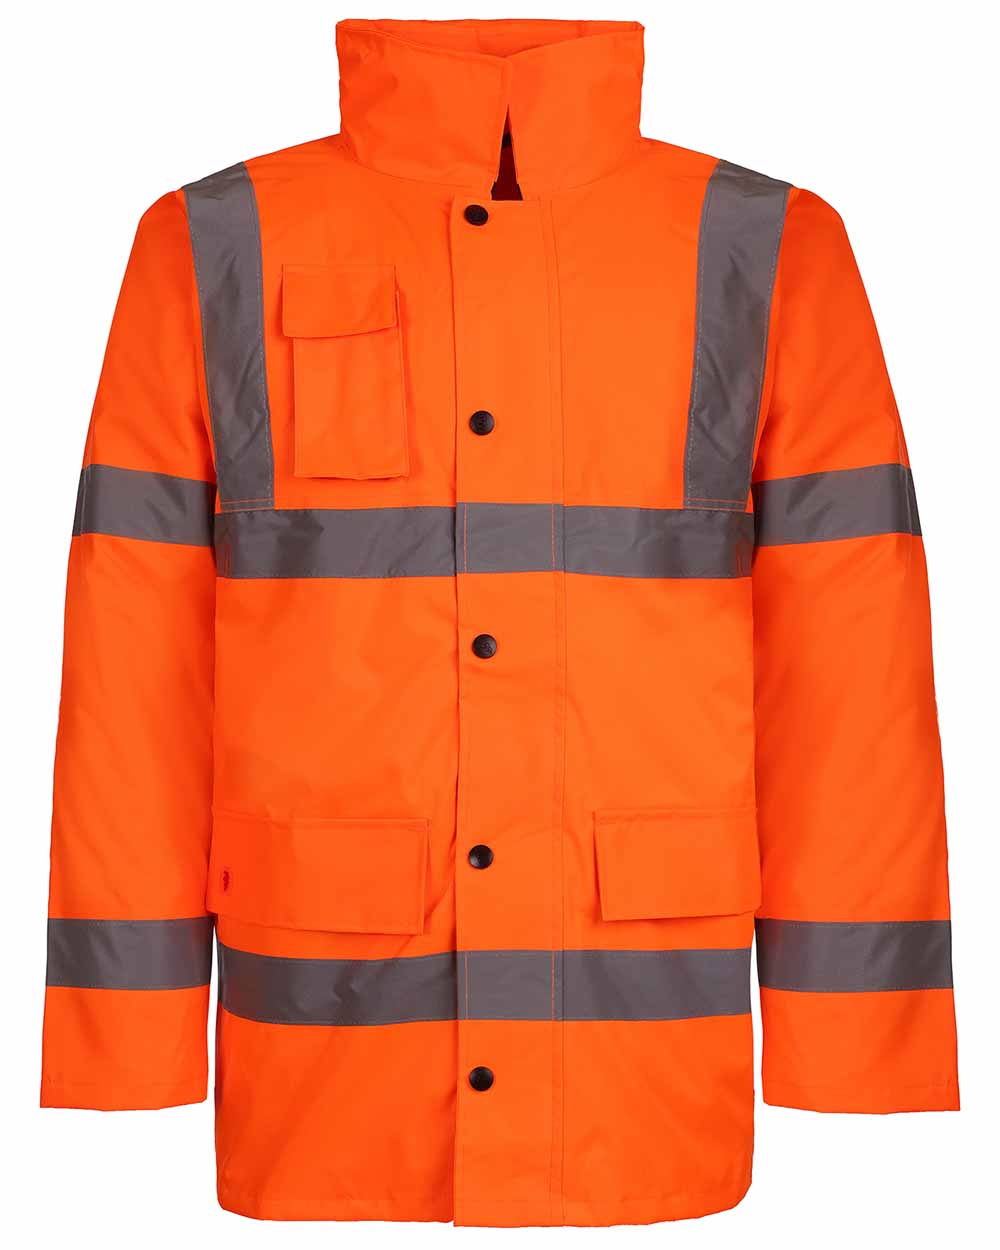 Fort Workwear Quilted Jacket in orange 